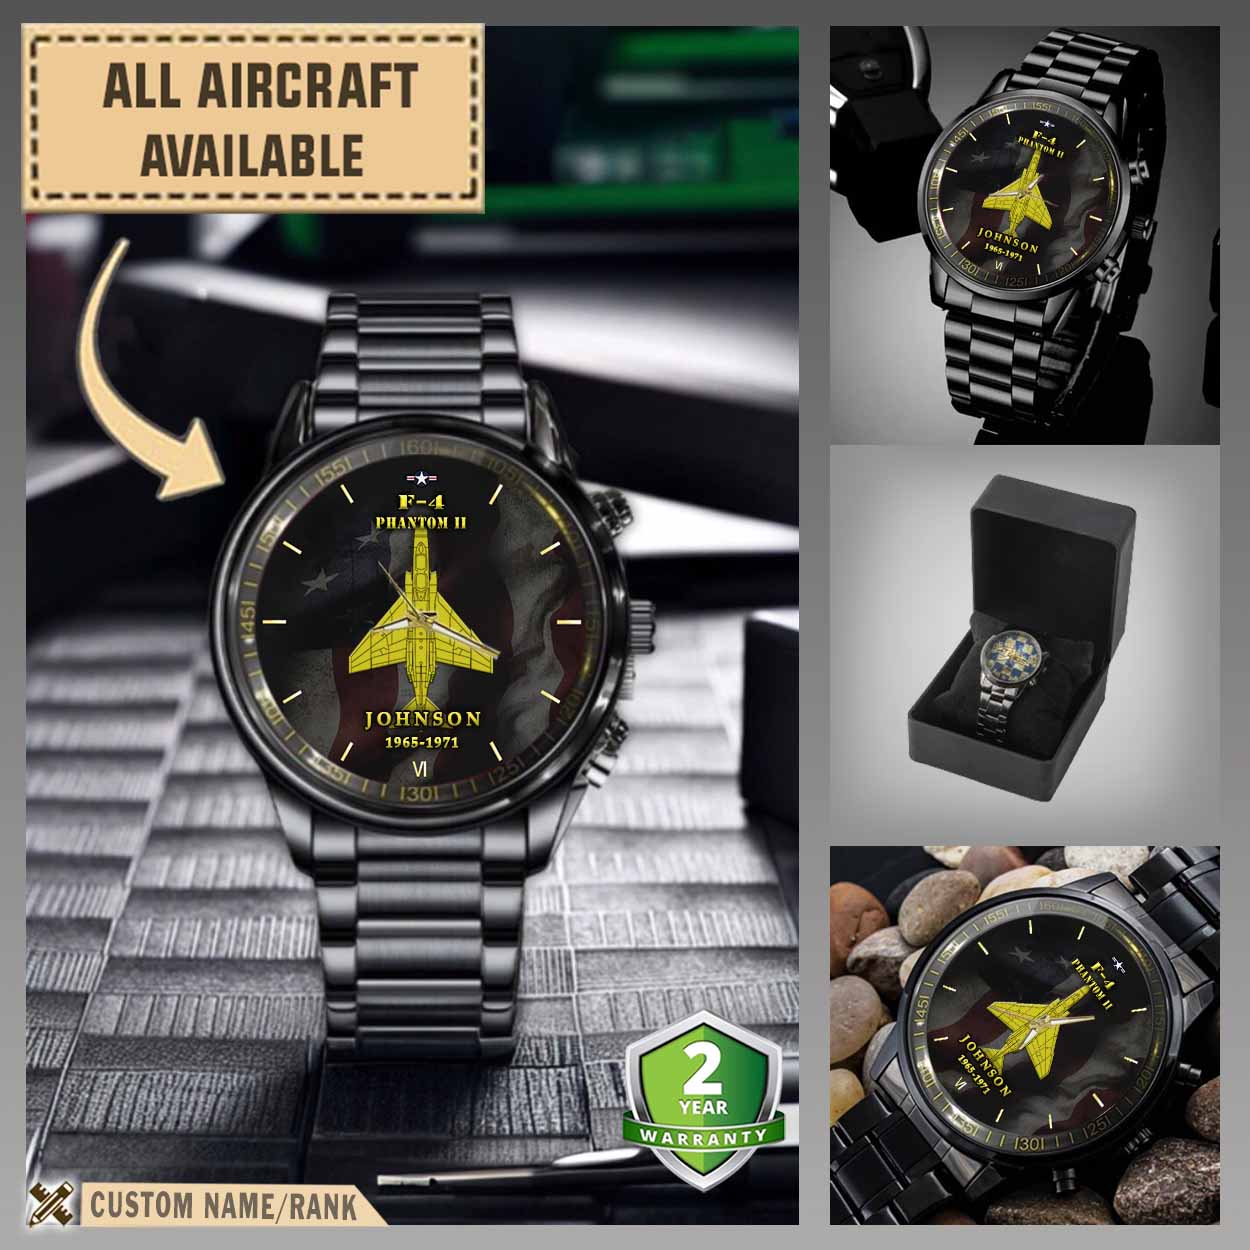 f 4 phantom ii f4aircraft black wrist watch l3w92